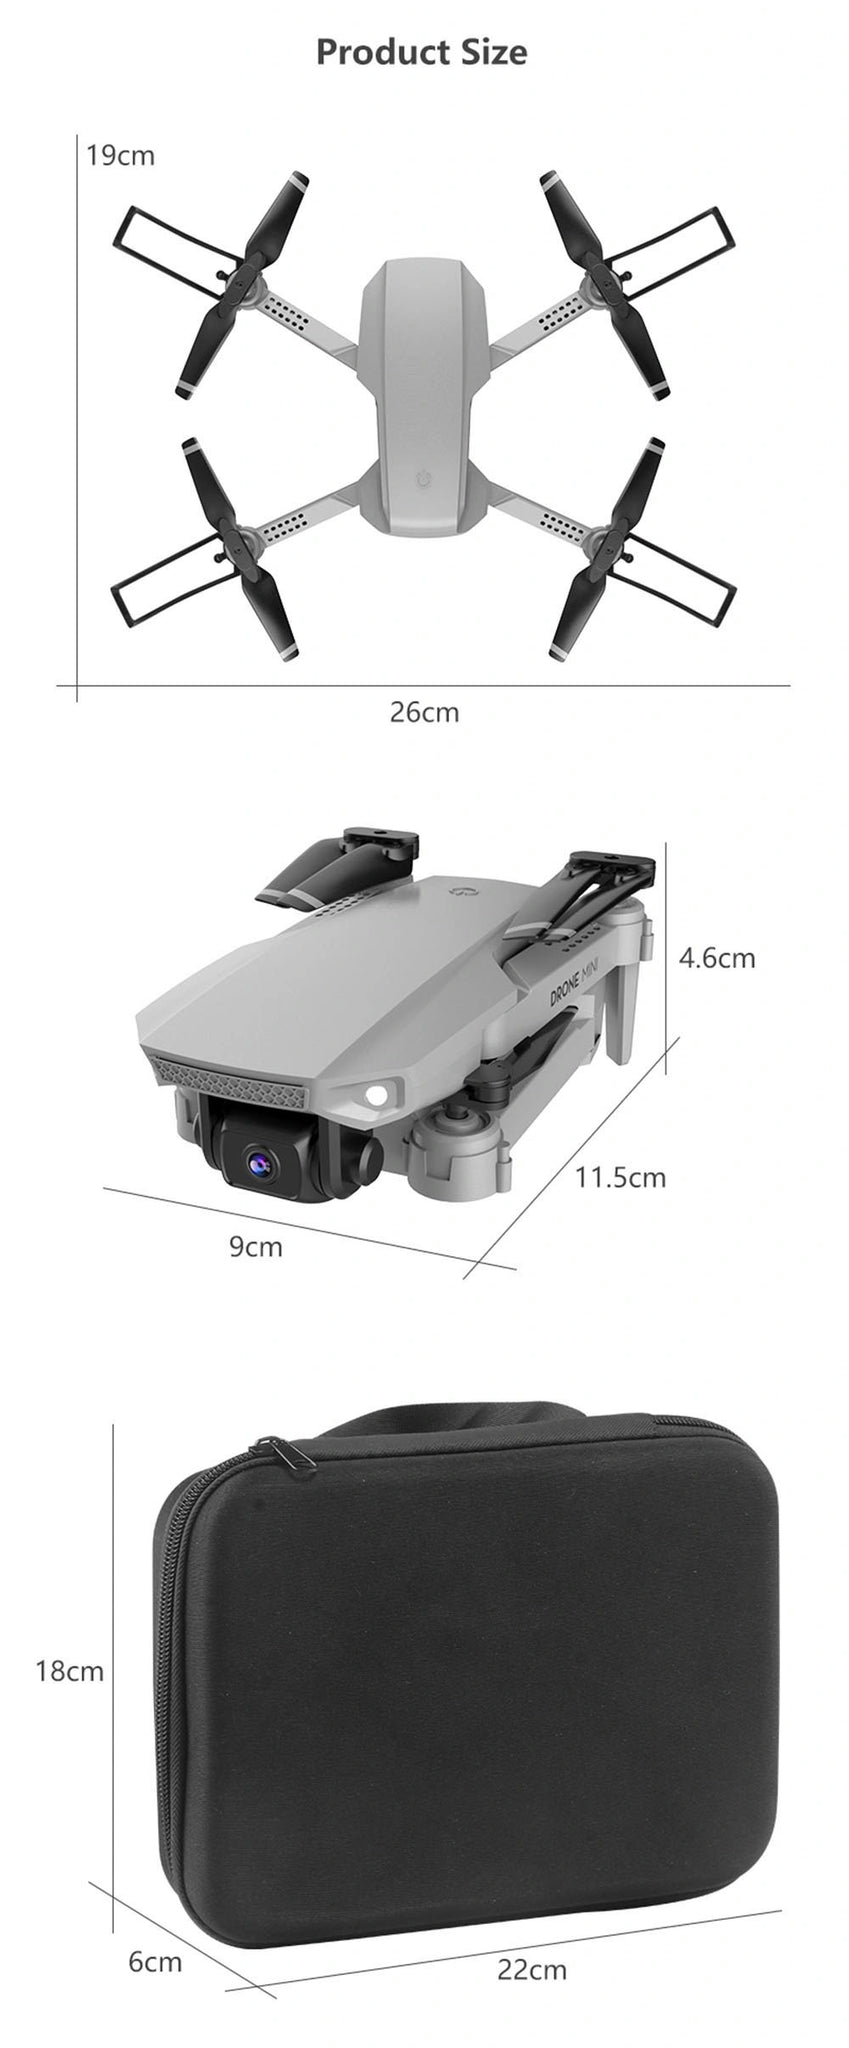 e88 drone product size